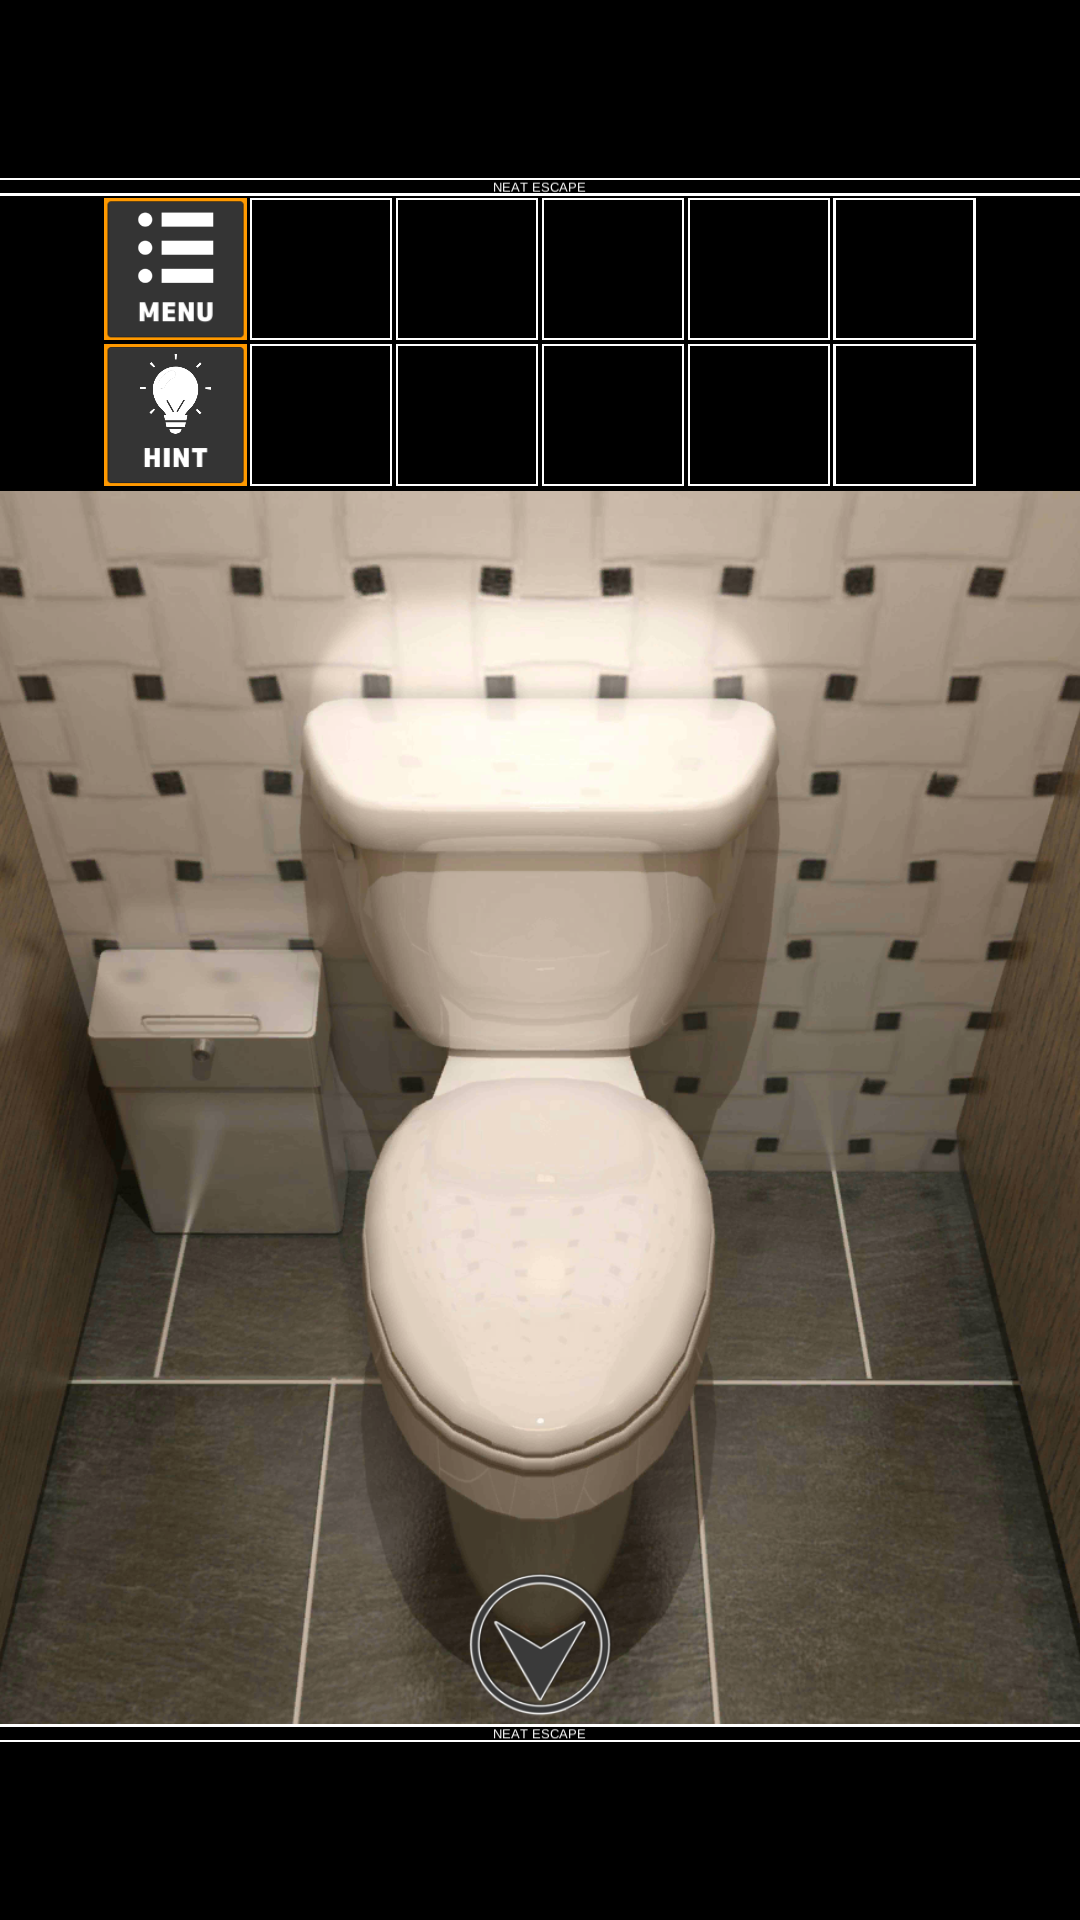 Screenshot 1 of เกมหนี: ห้องน้ำ 2 1.60